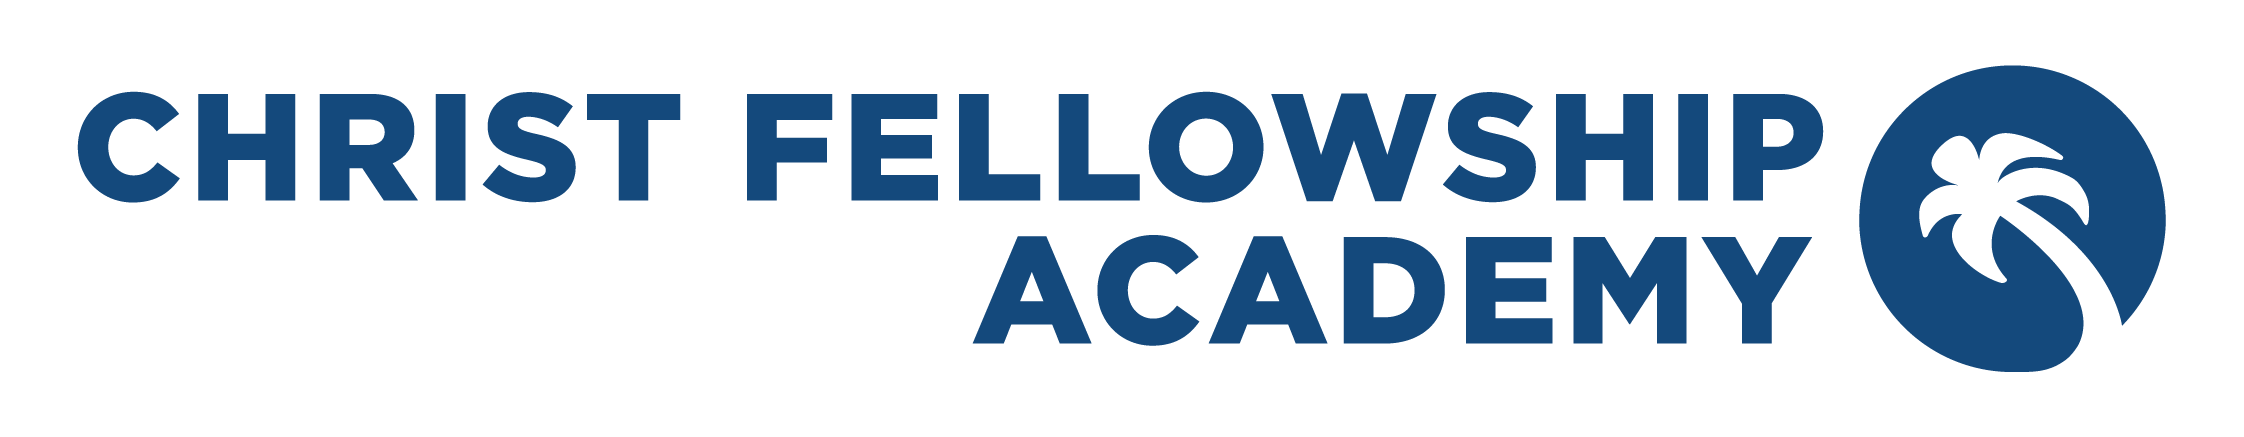 Christ Fellowship Academy